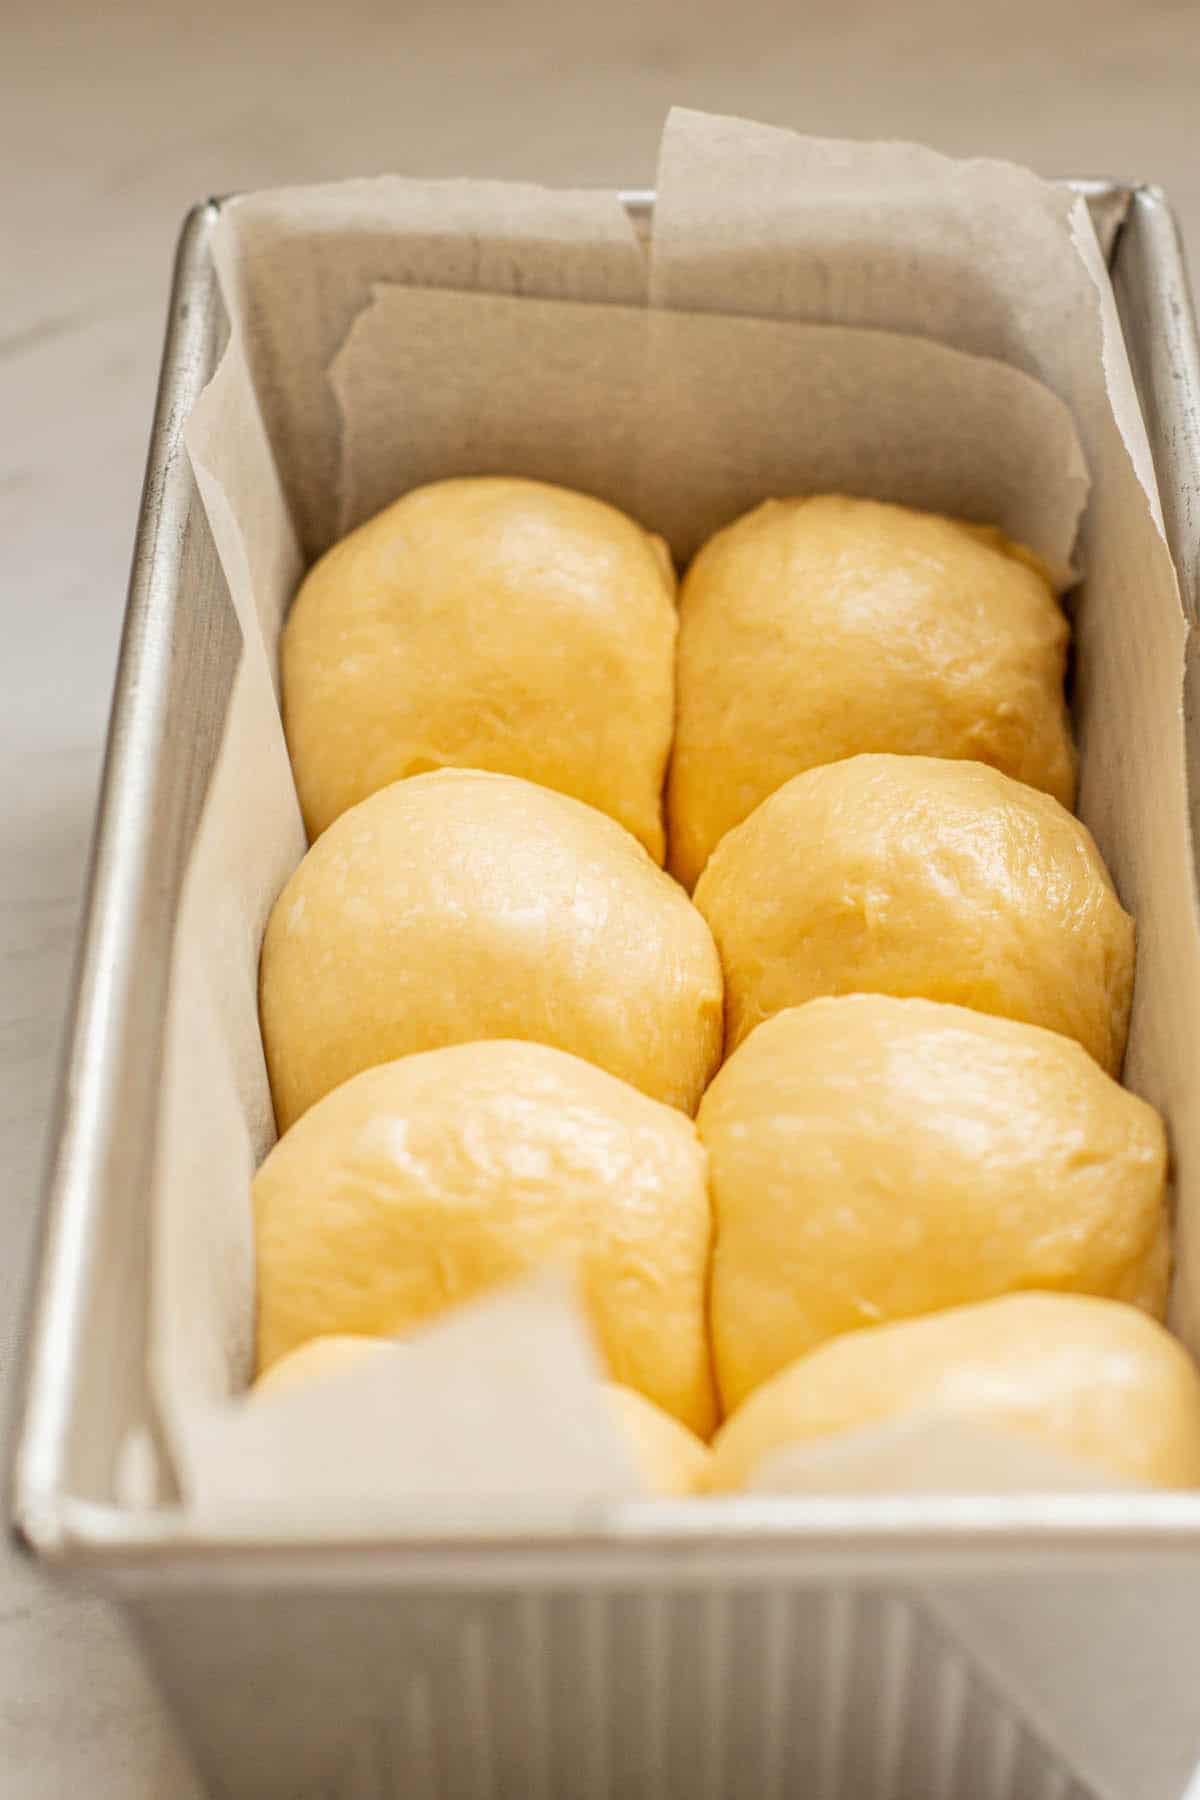 unrisen dough.